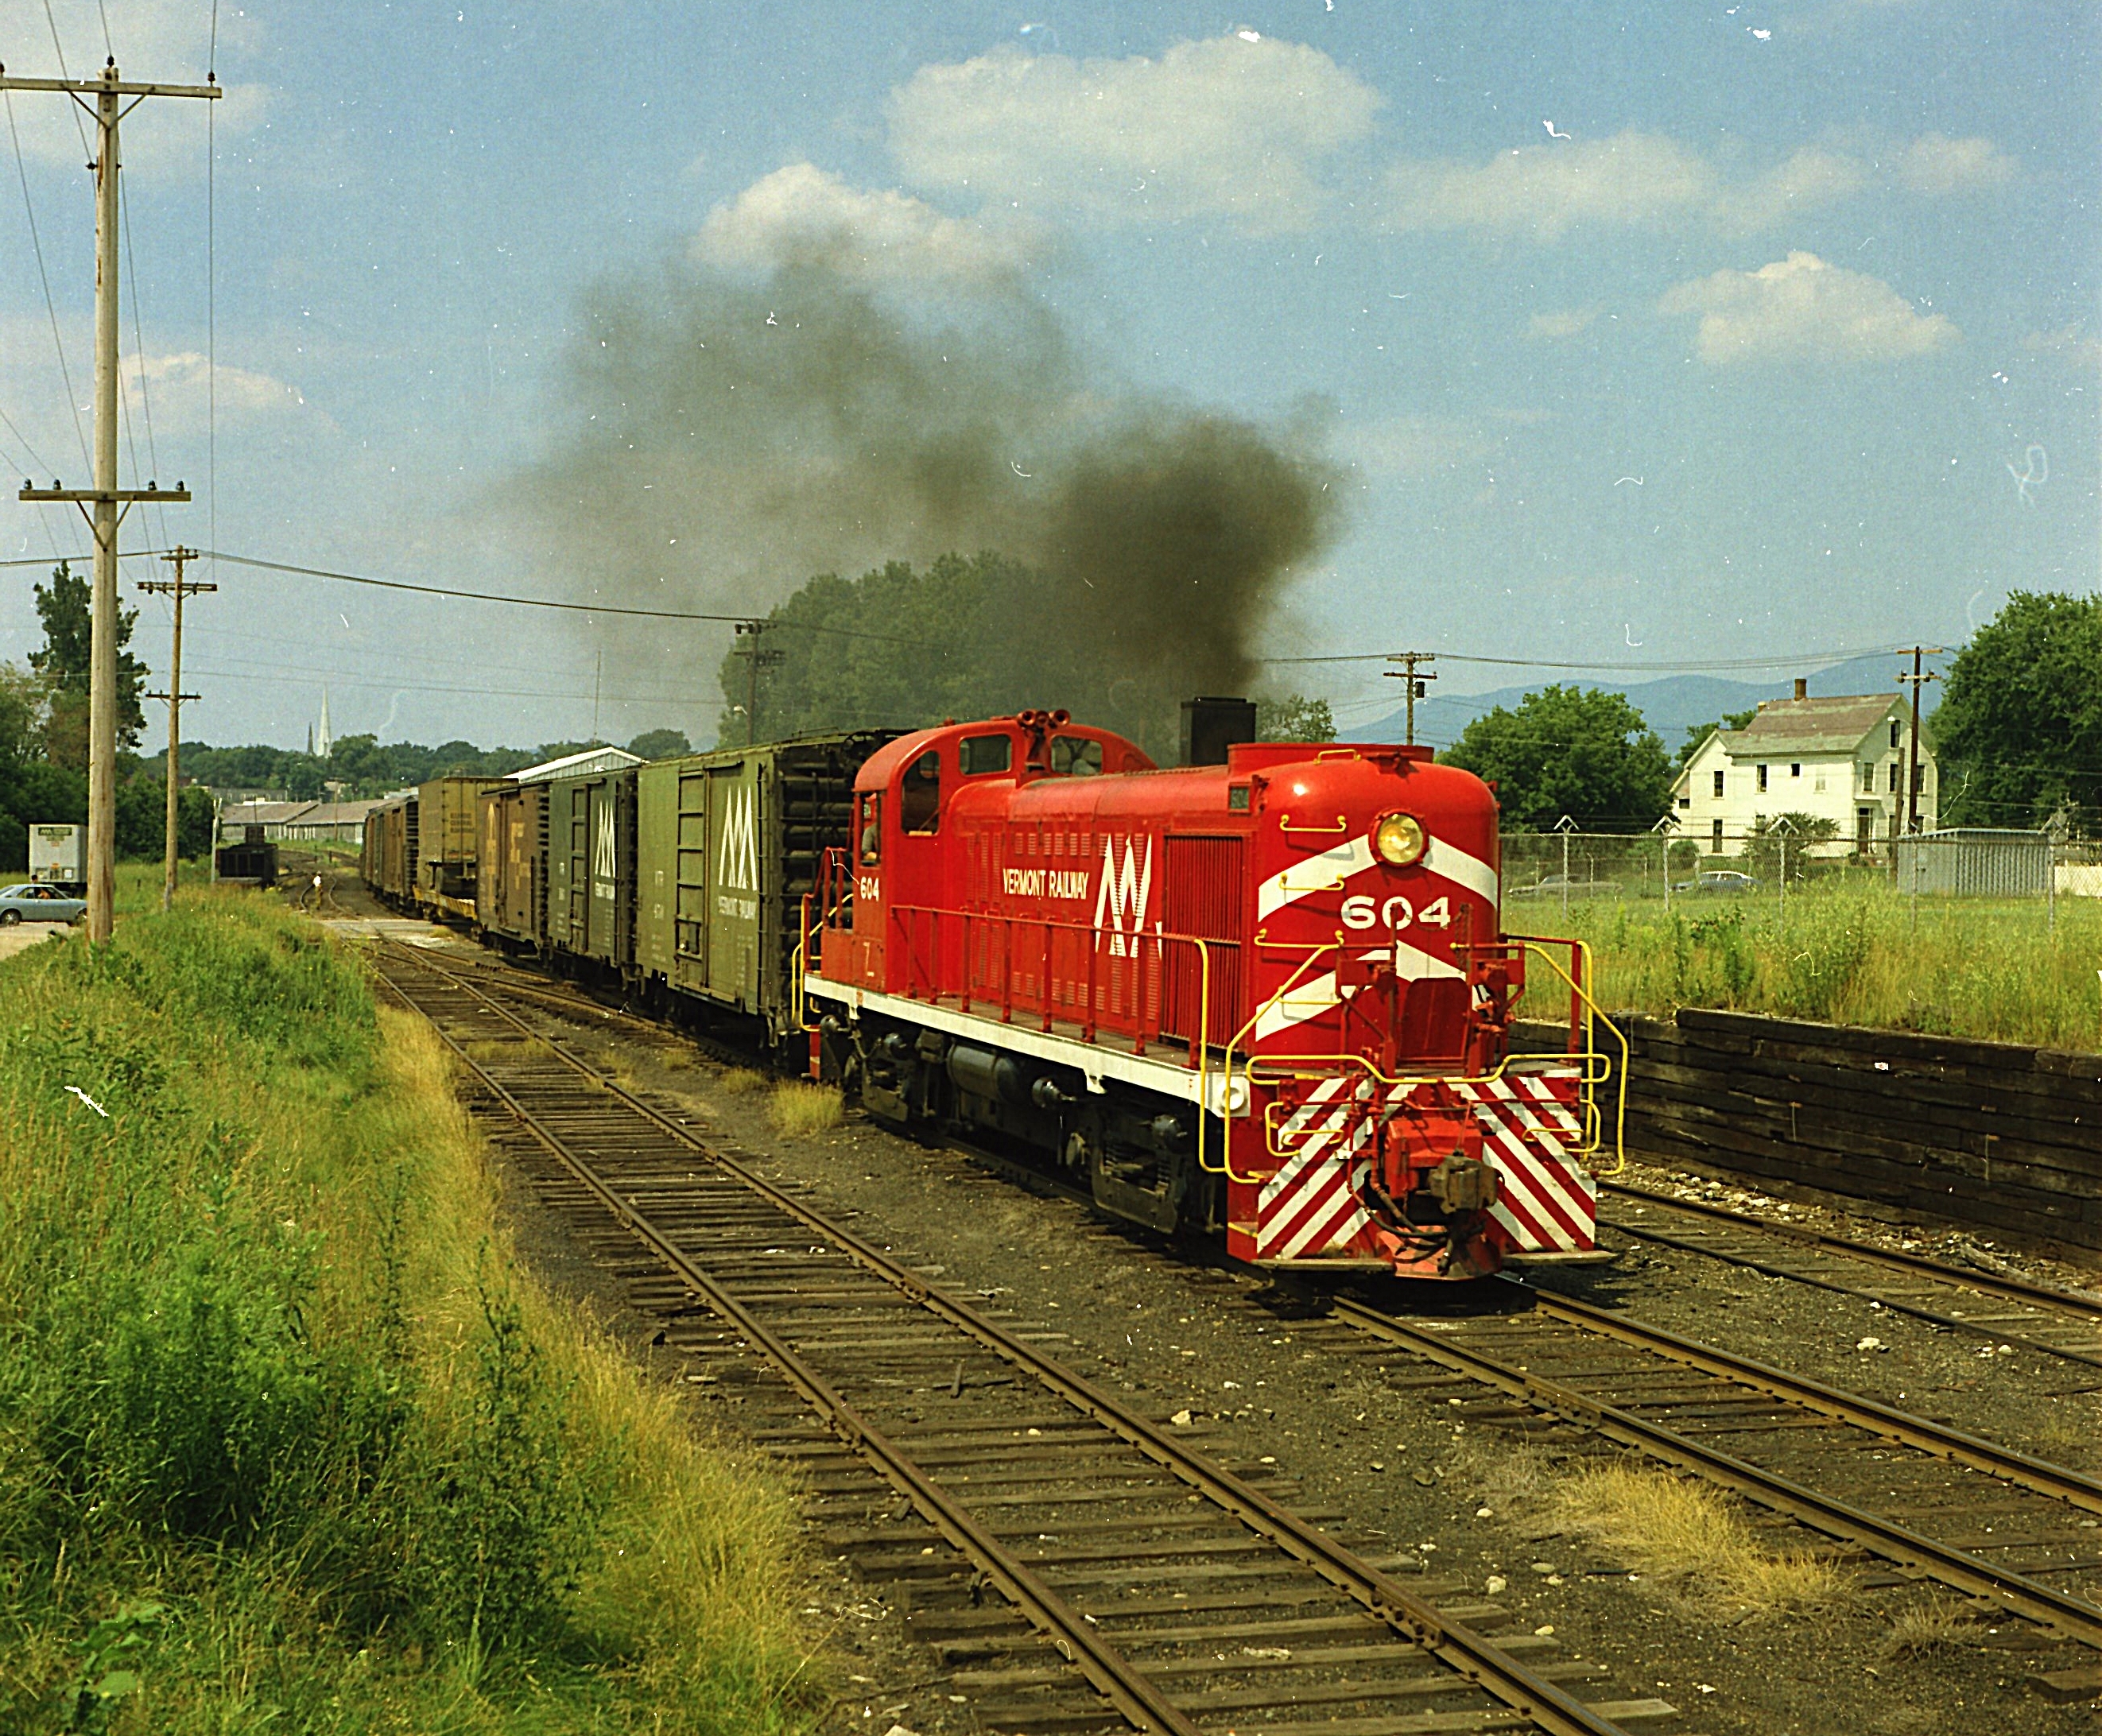 Rutland, VT: The NERAIL New England Railroad Photo Archive